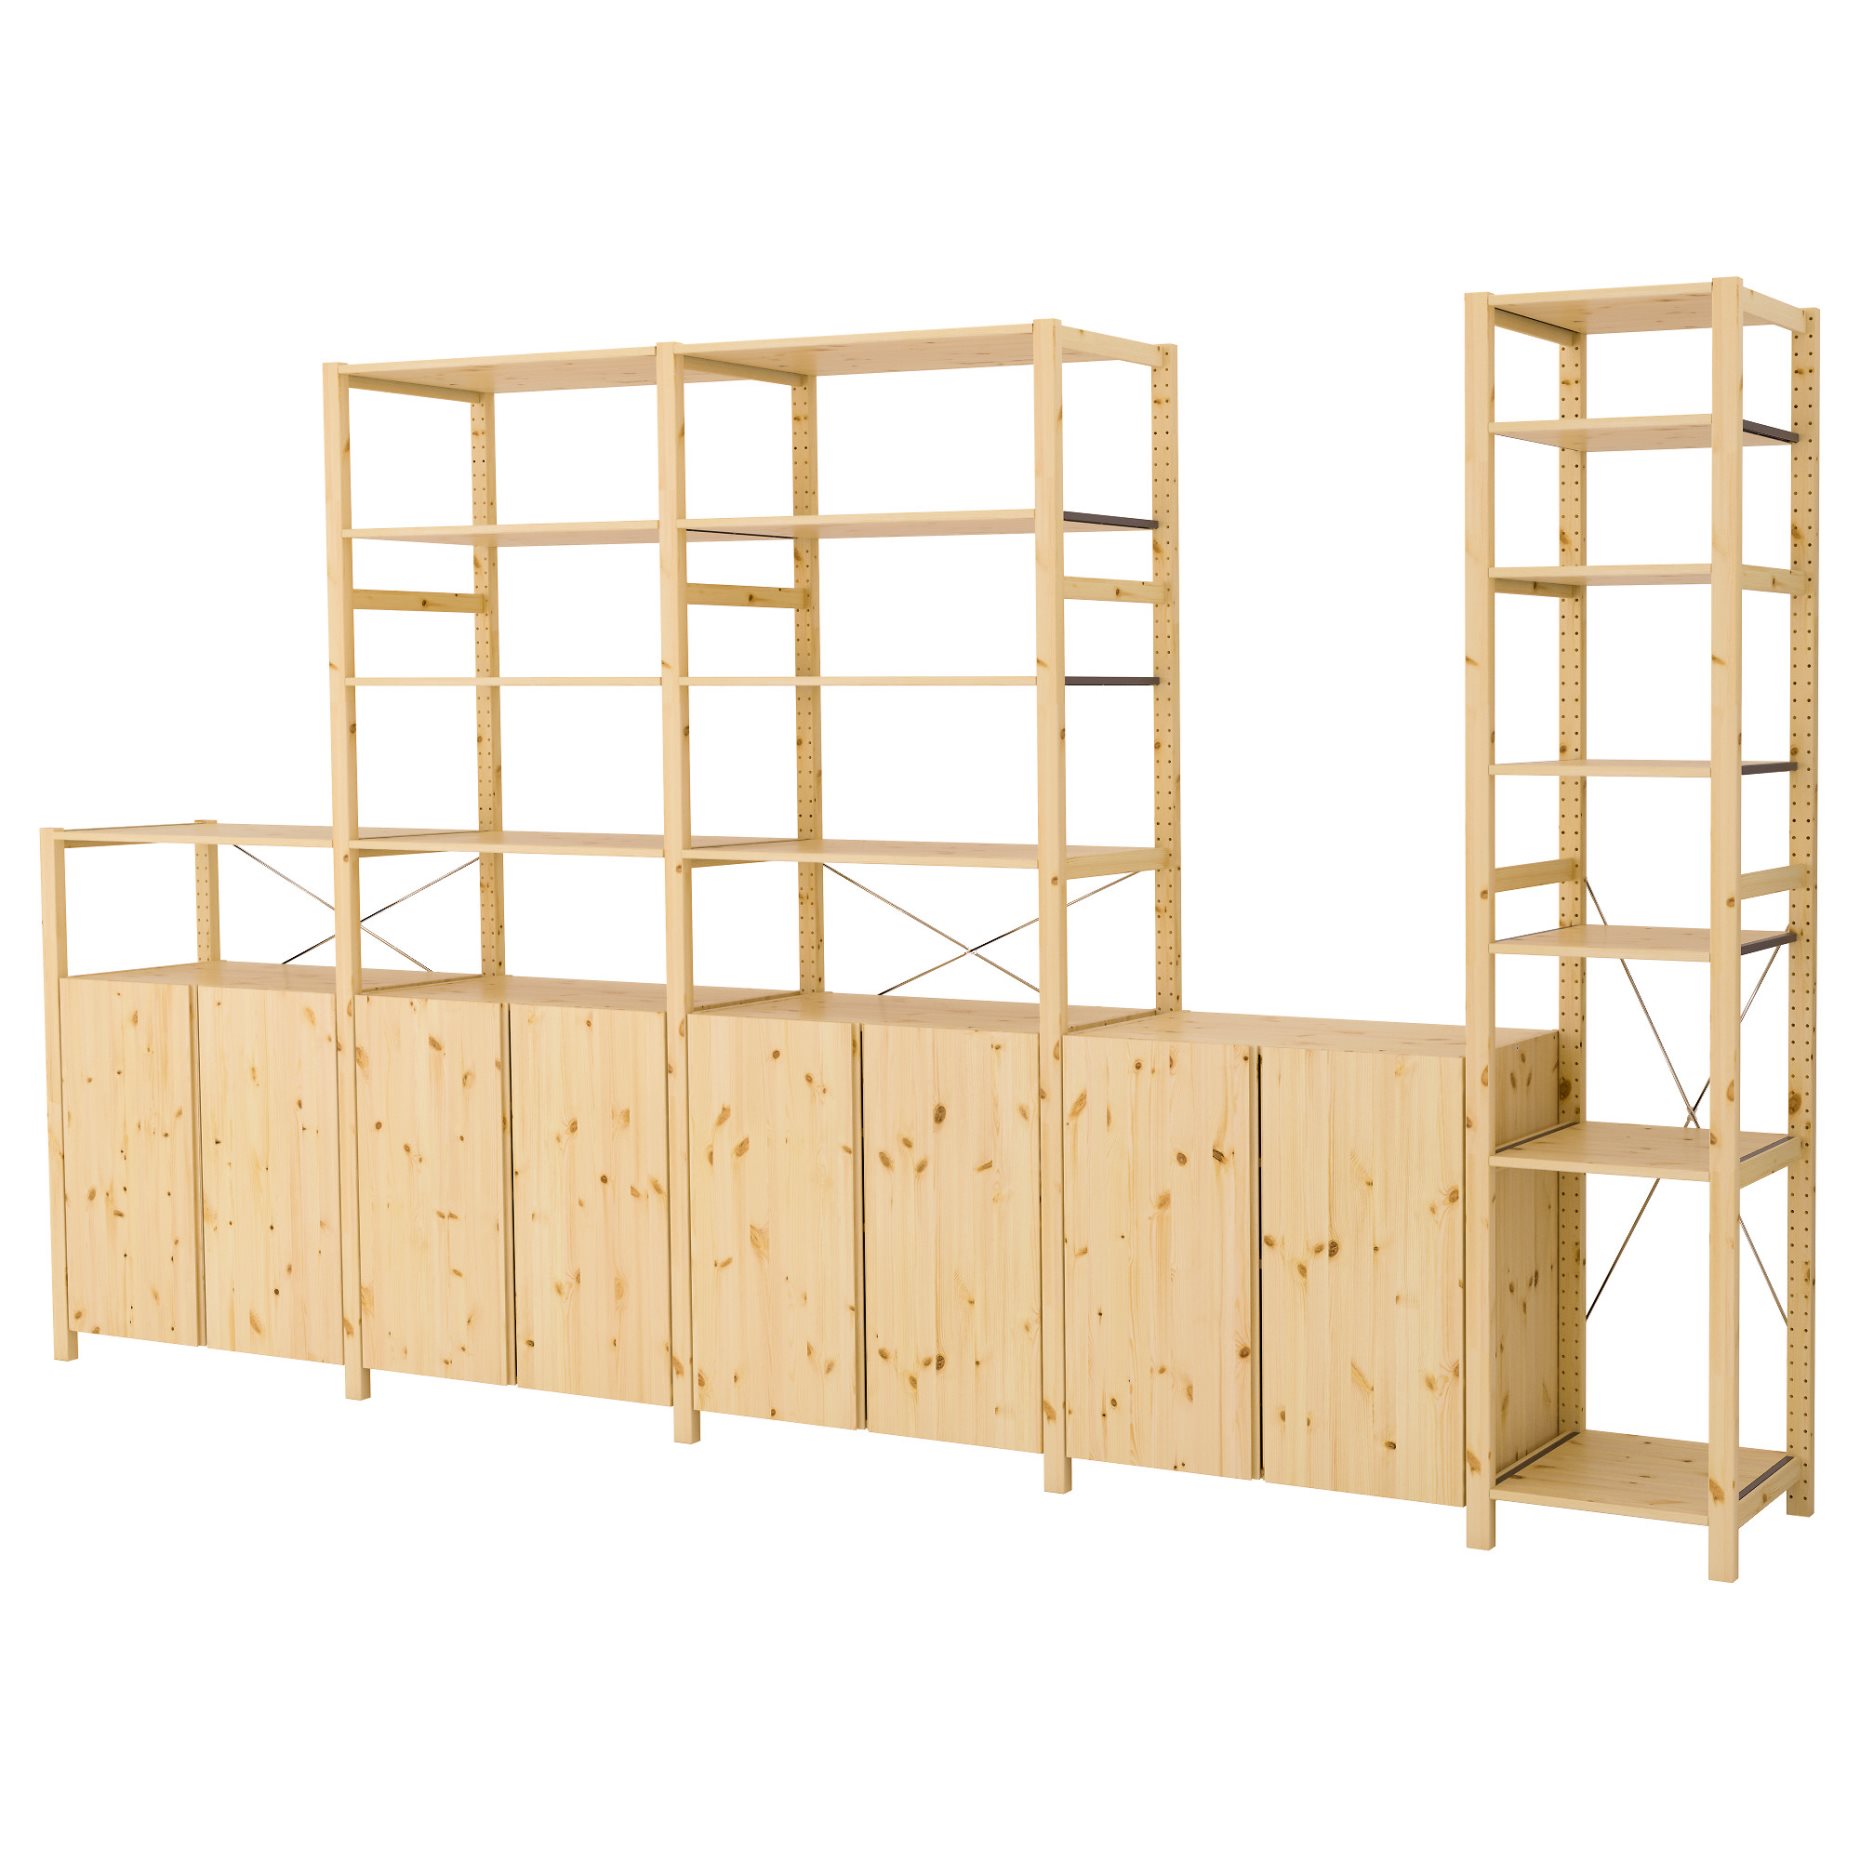 IVAR, 5 sections/shelves/cabinets, 389x50x226 cm, 192.485.48